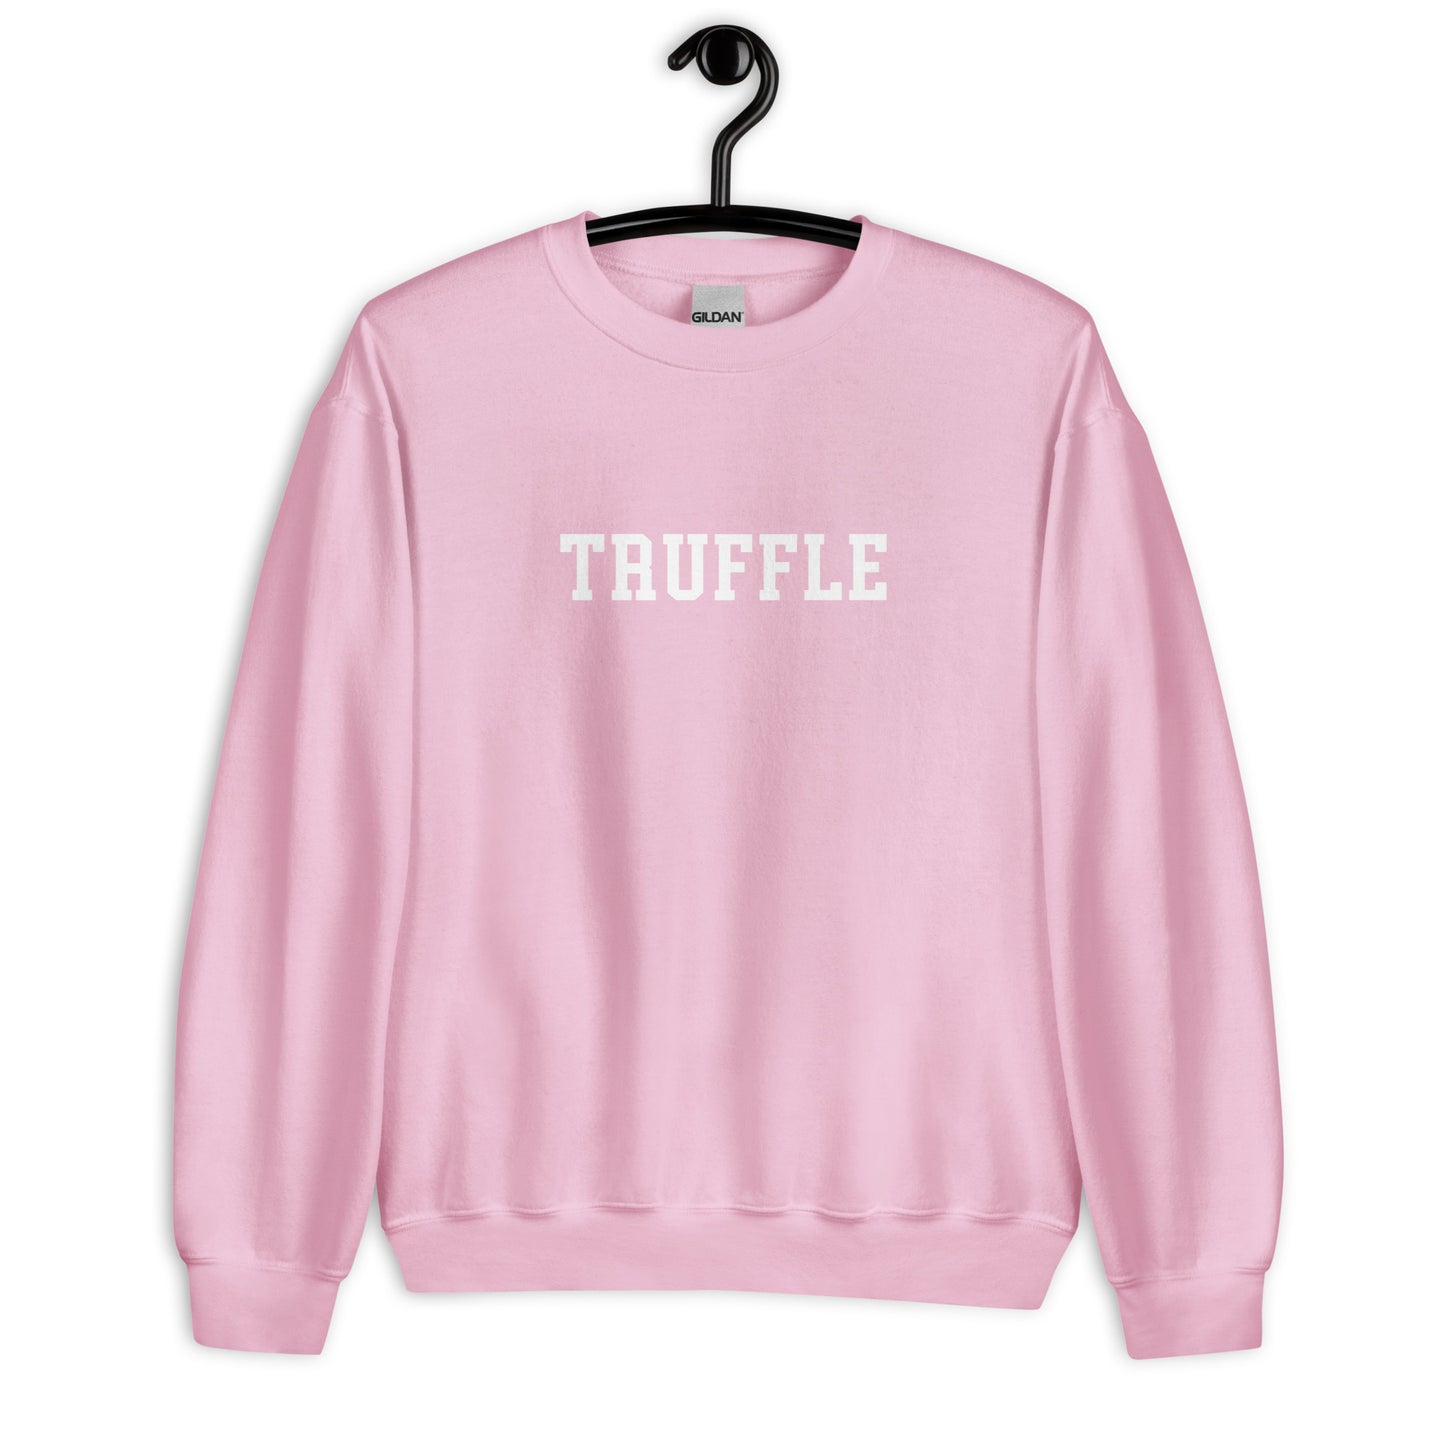 Truffle Sweatshirt - Straight Font